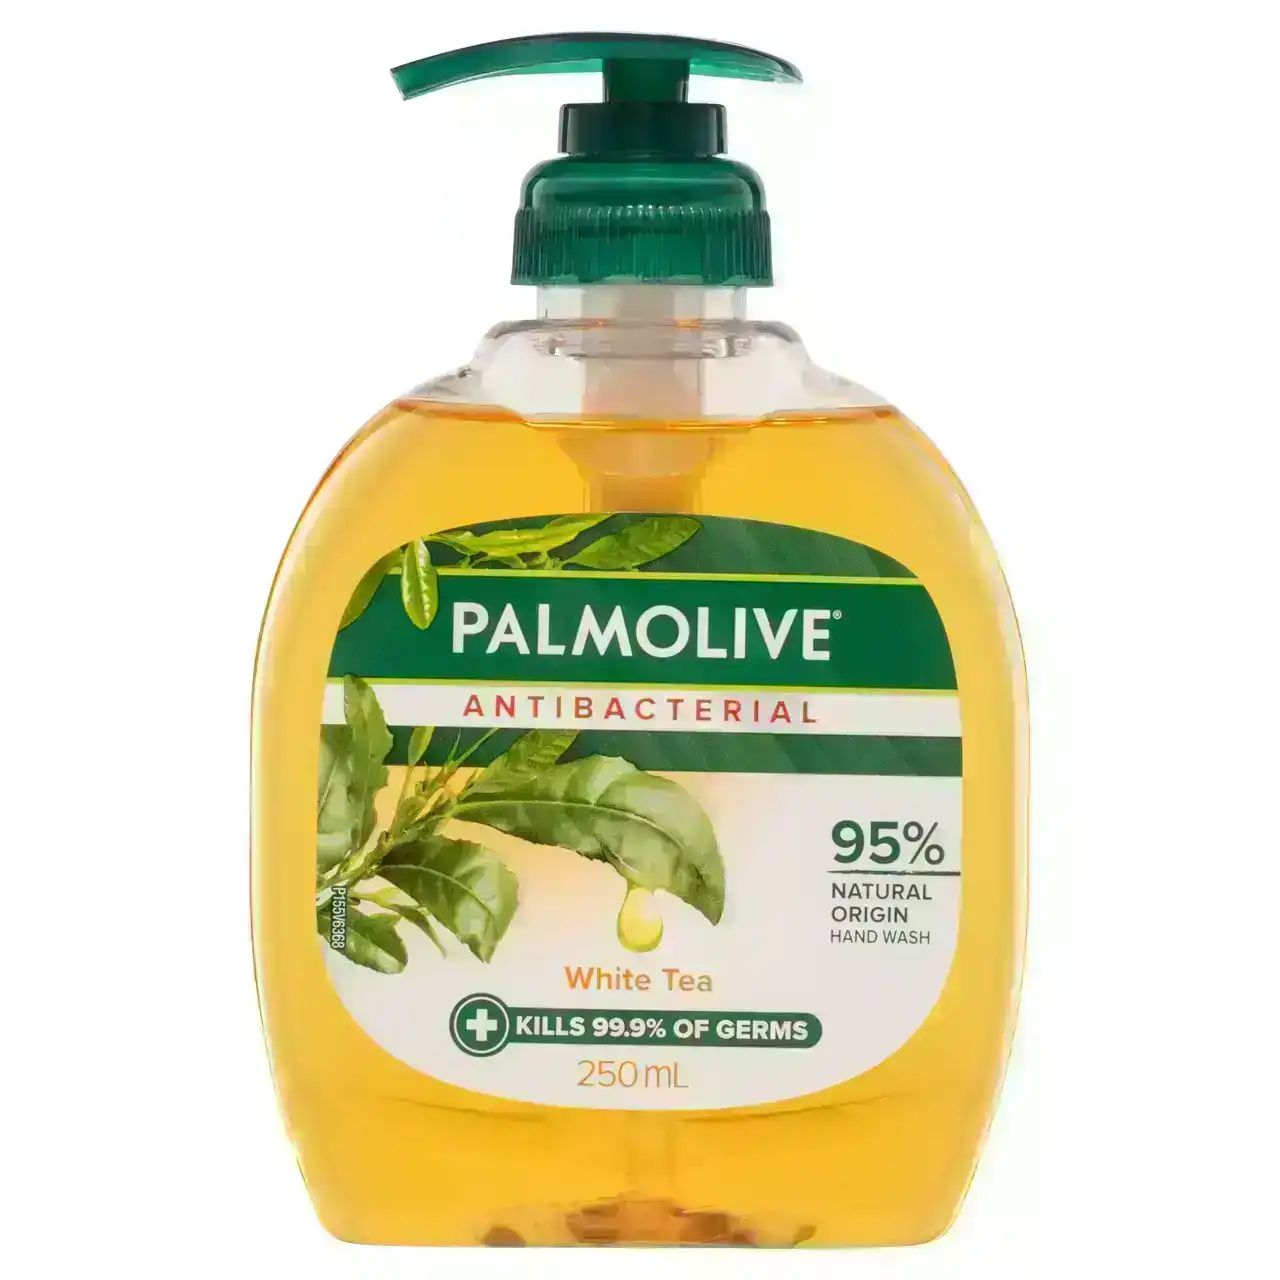 Palmolive Antibacterial Liquid Hand Wash Soap 250mL, White Tea Pump, No Parabens Phthalates or Alcohol